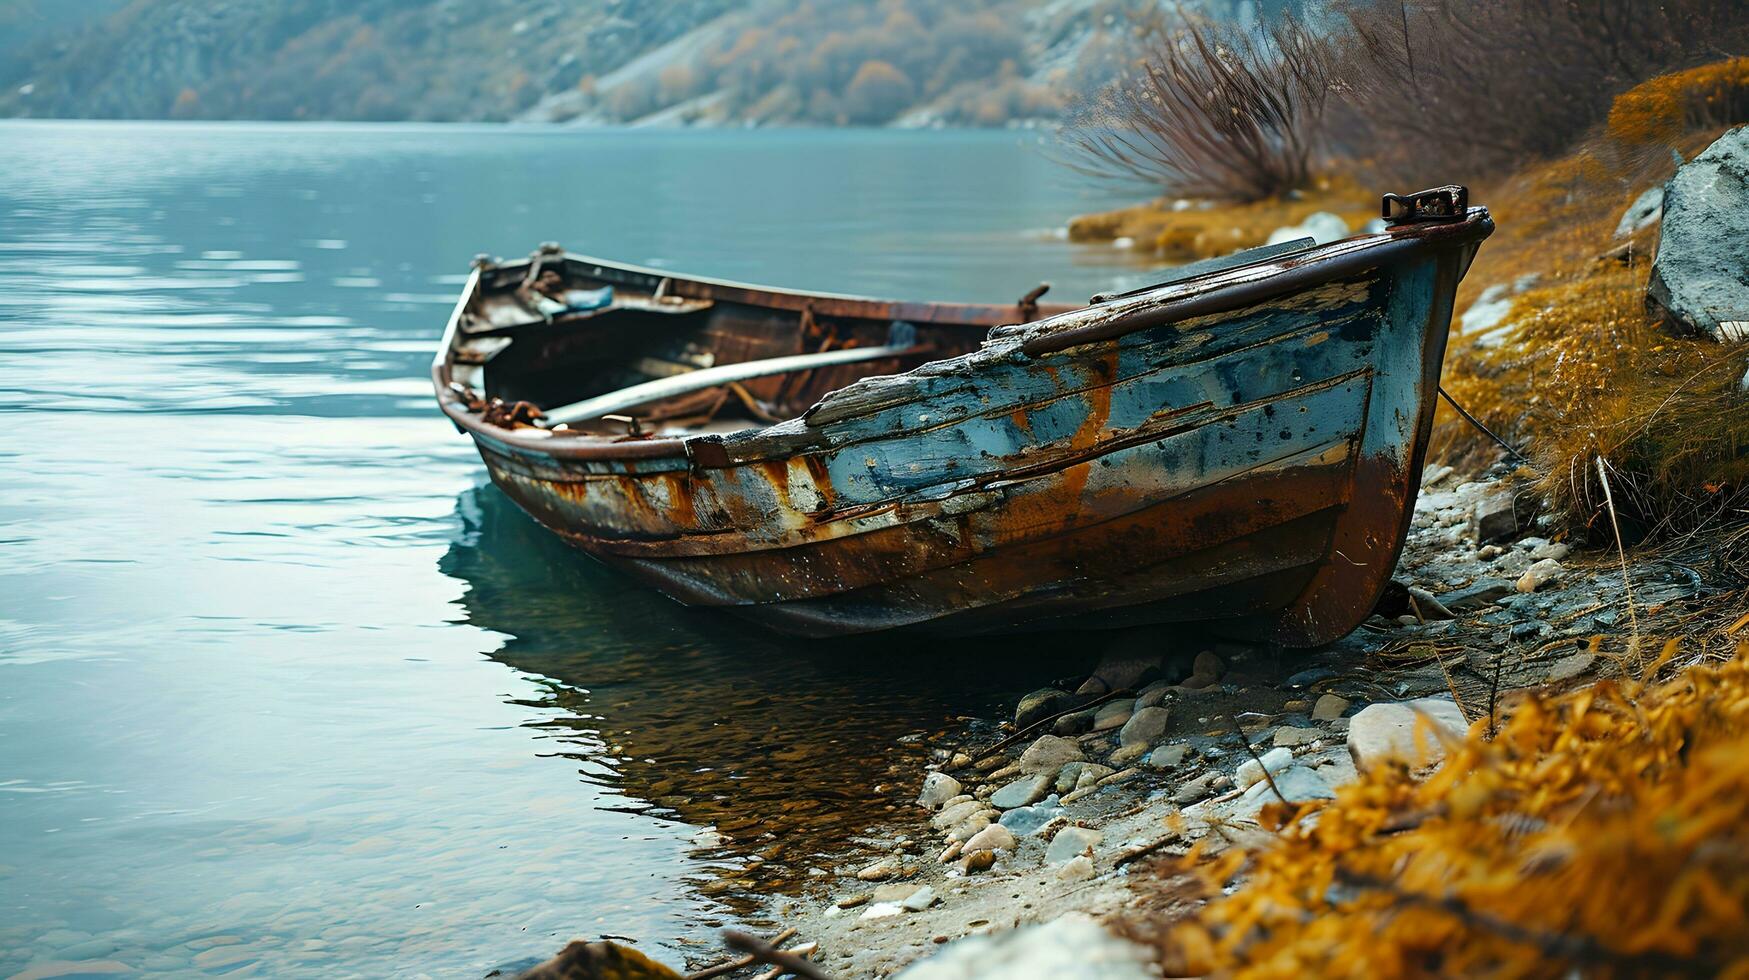 ai generado abandonado barco tranquilo lago otoño follaje rocoso apuntalar brumoso montañas foto